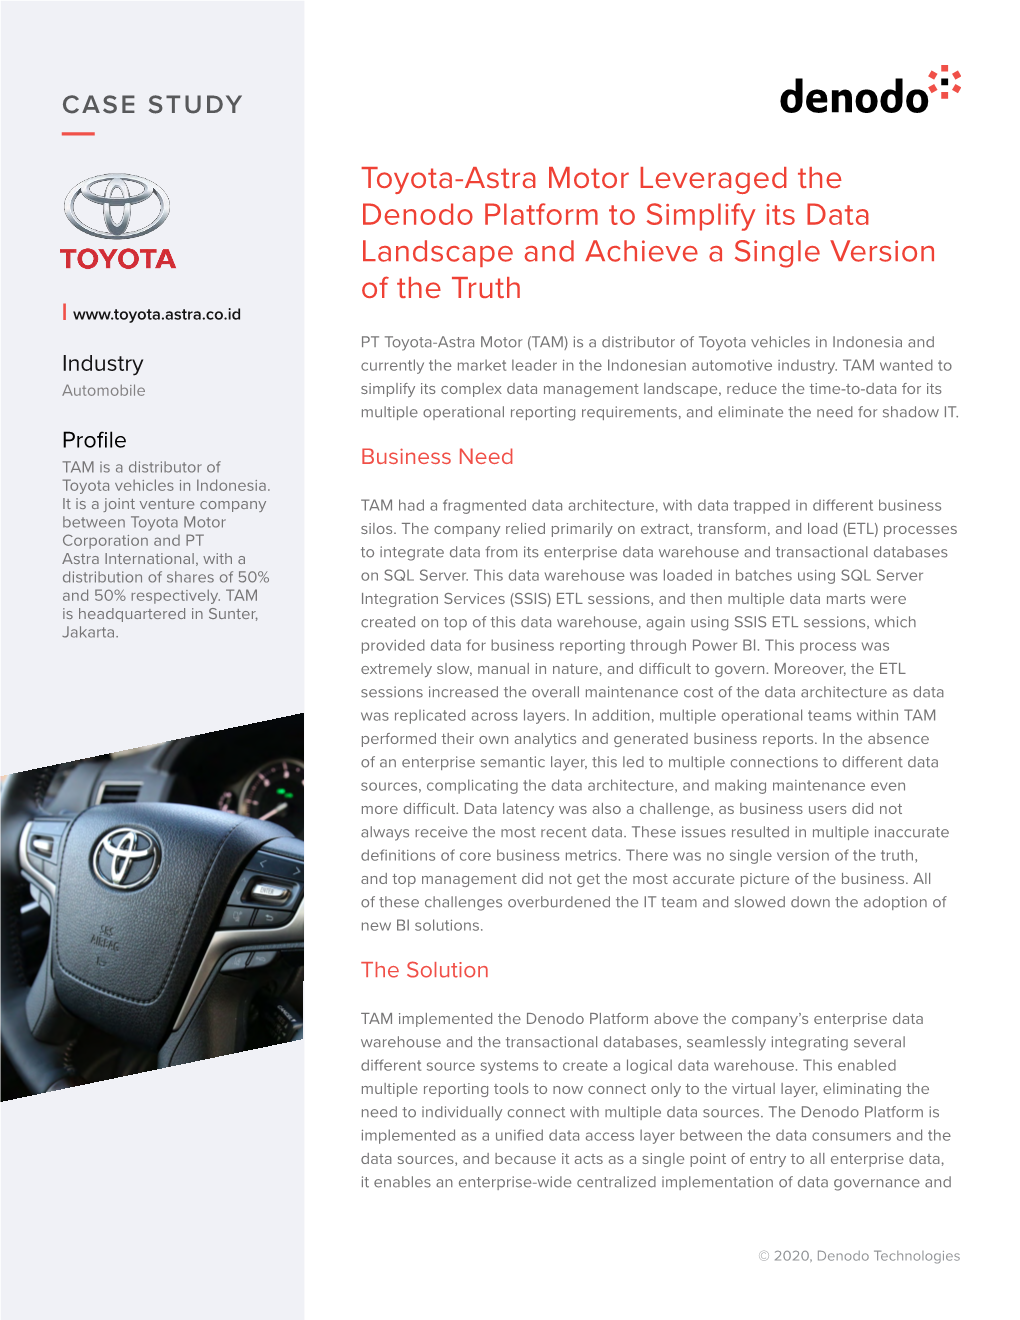 Toyota-Astra Motor Leveraged the Denodo Platform to Simplify Its Data